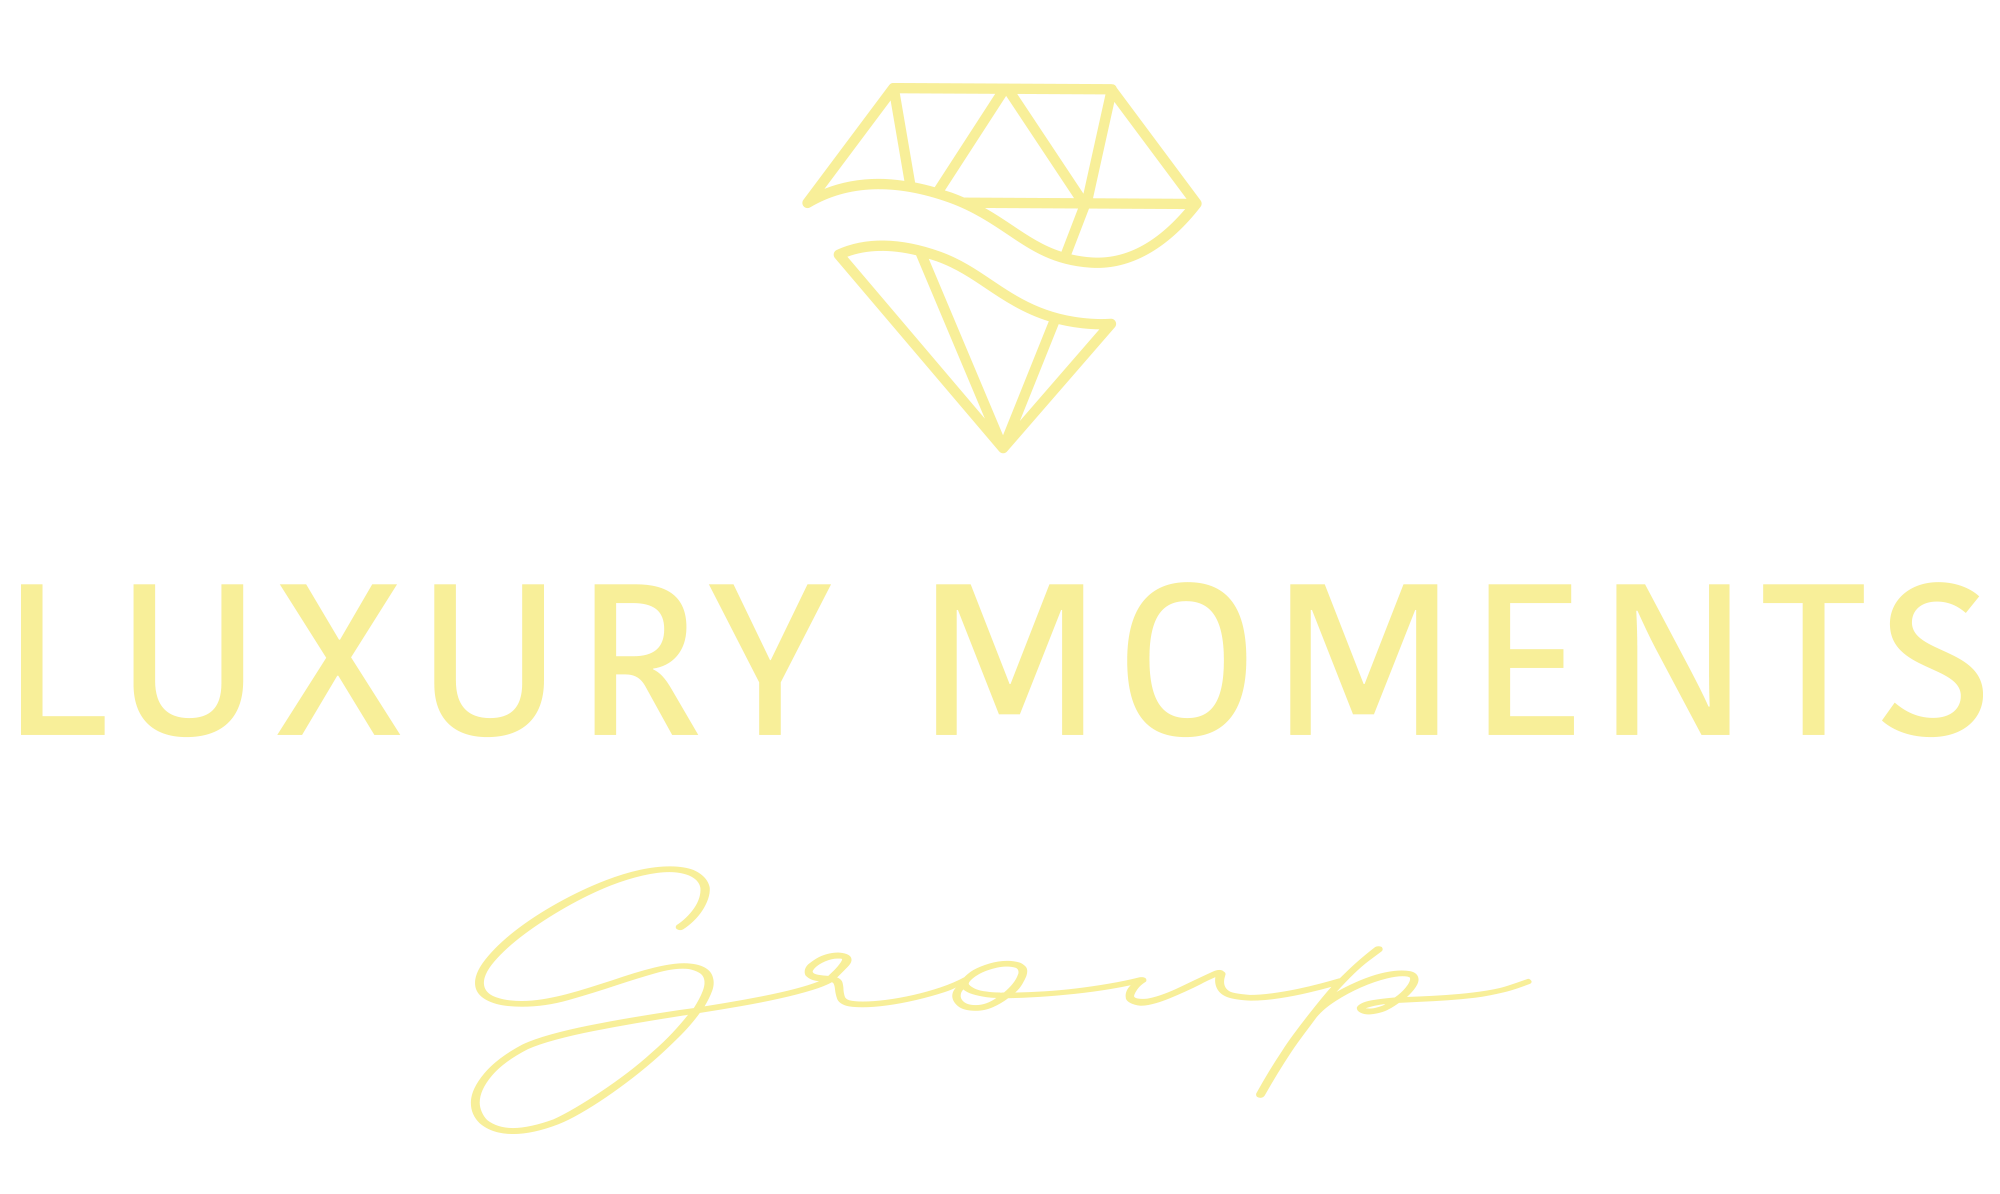 https://luxurymomentsgroup.com/wp-content/uploads/2020/03/luxury-transparente-amarillo9.png